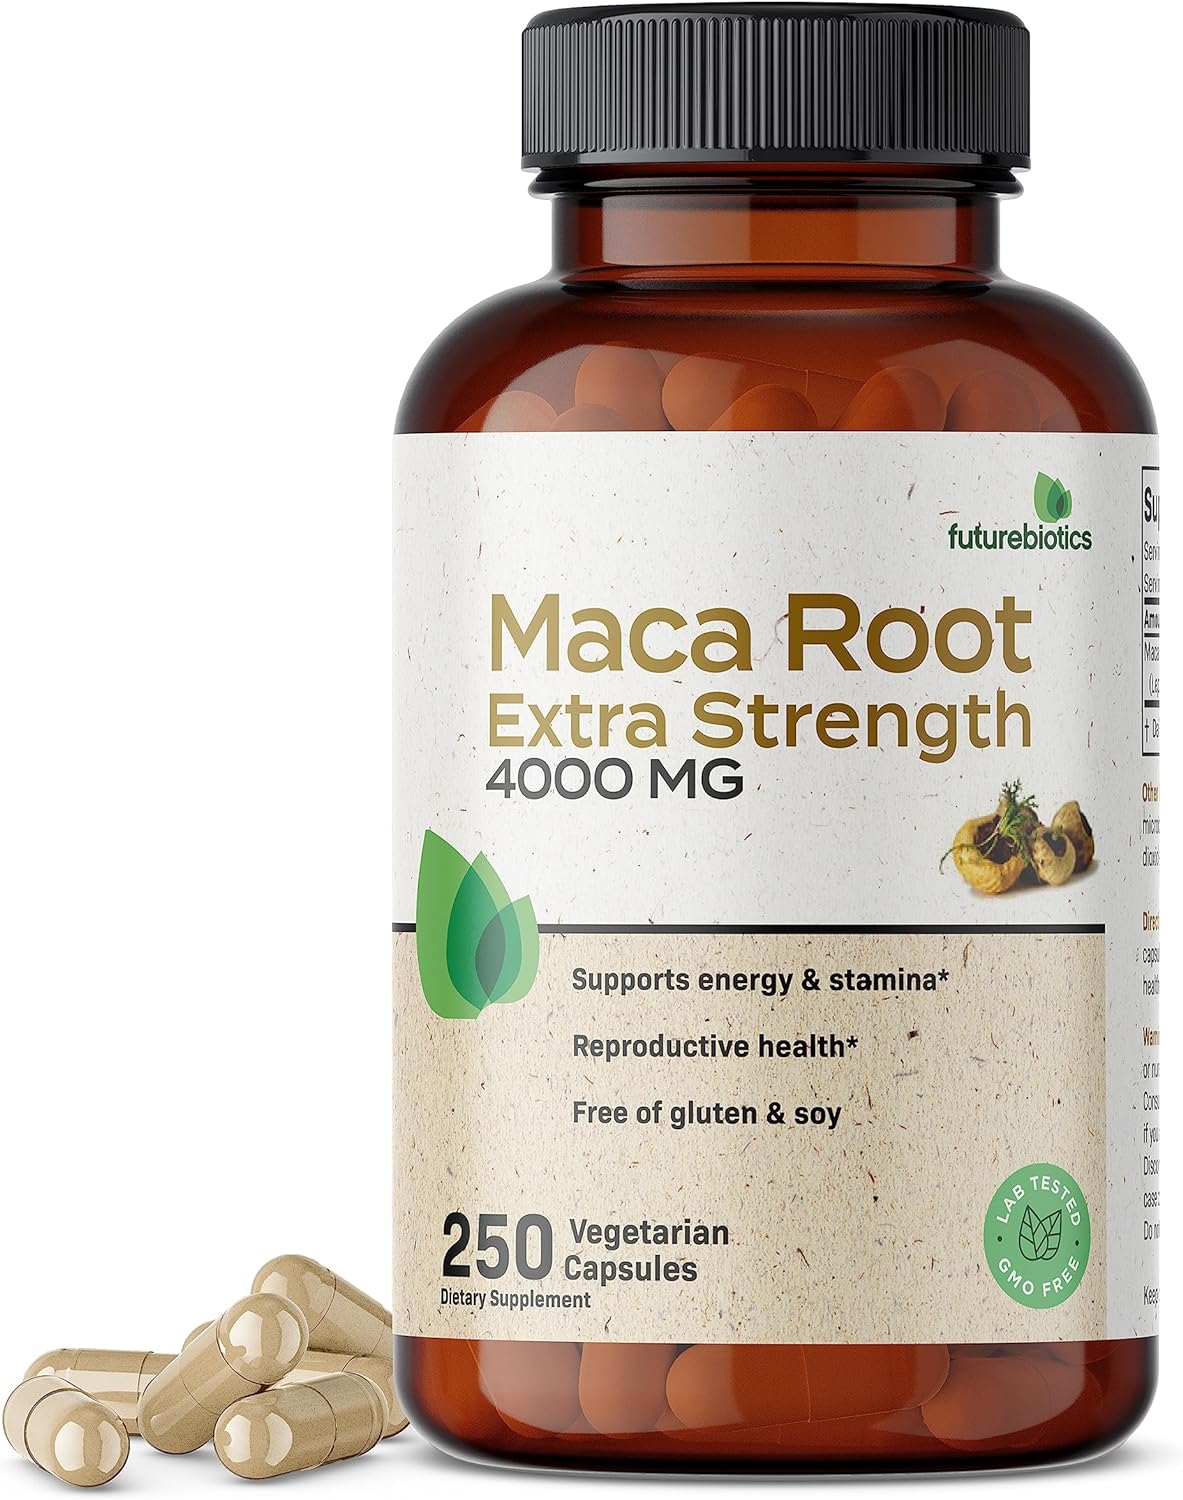 Futurebiotics Maca Root Extra Strength 4000 MG Supports Energy, Stamin